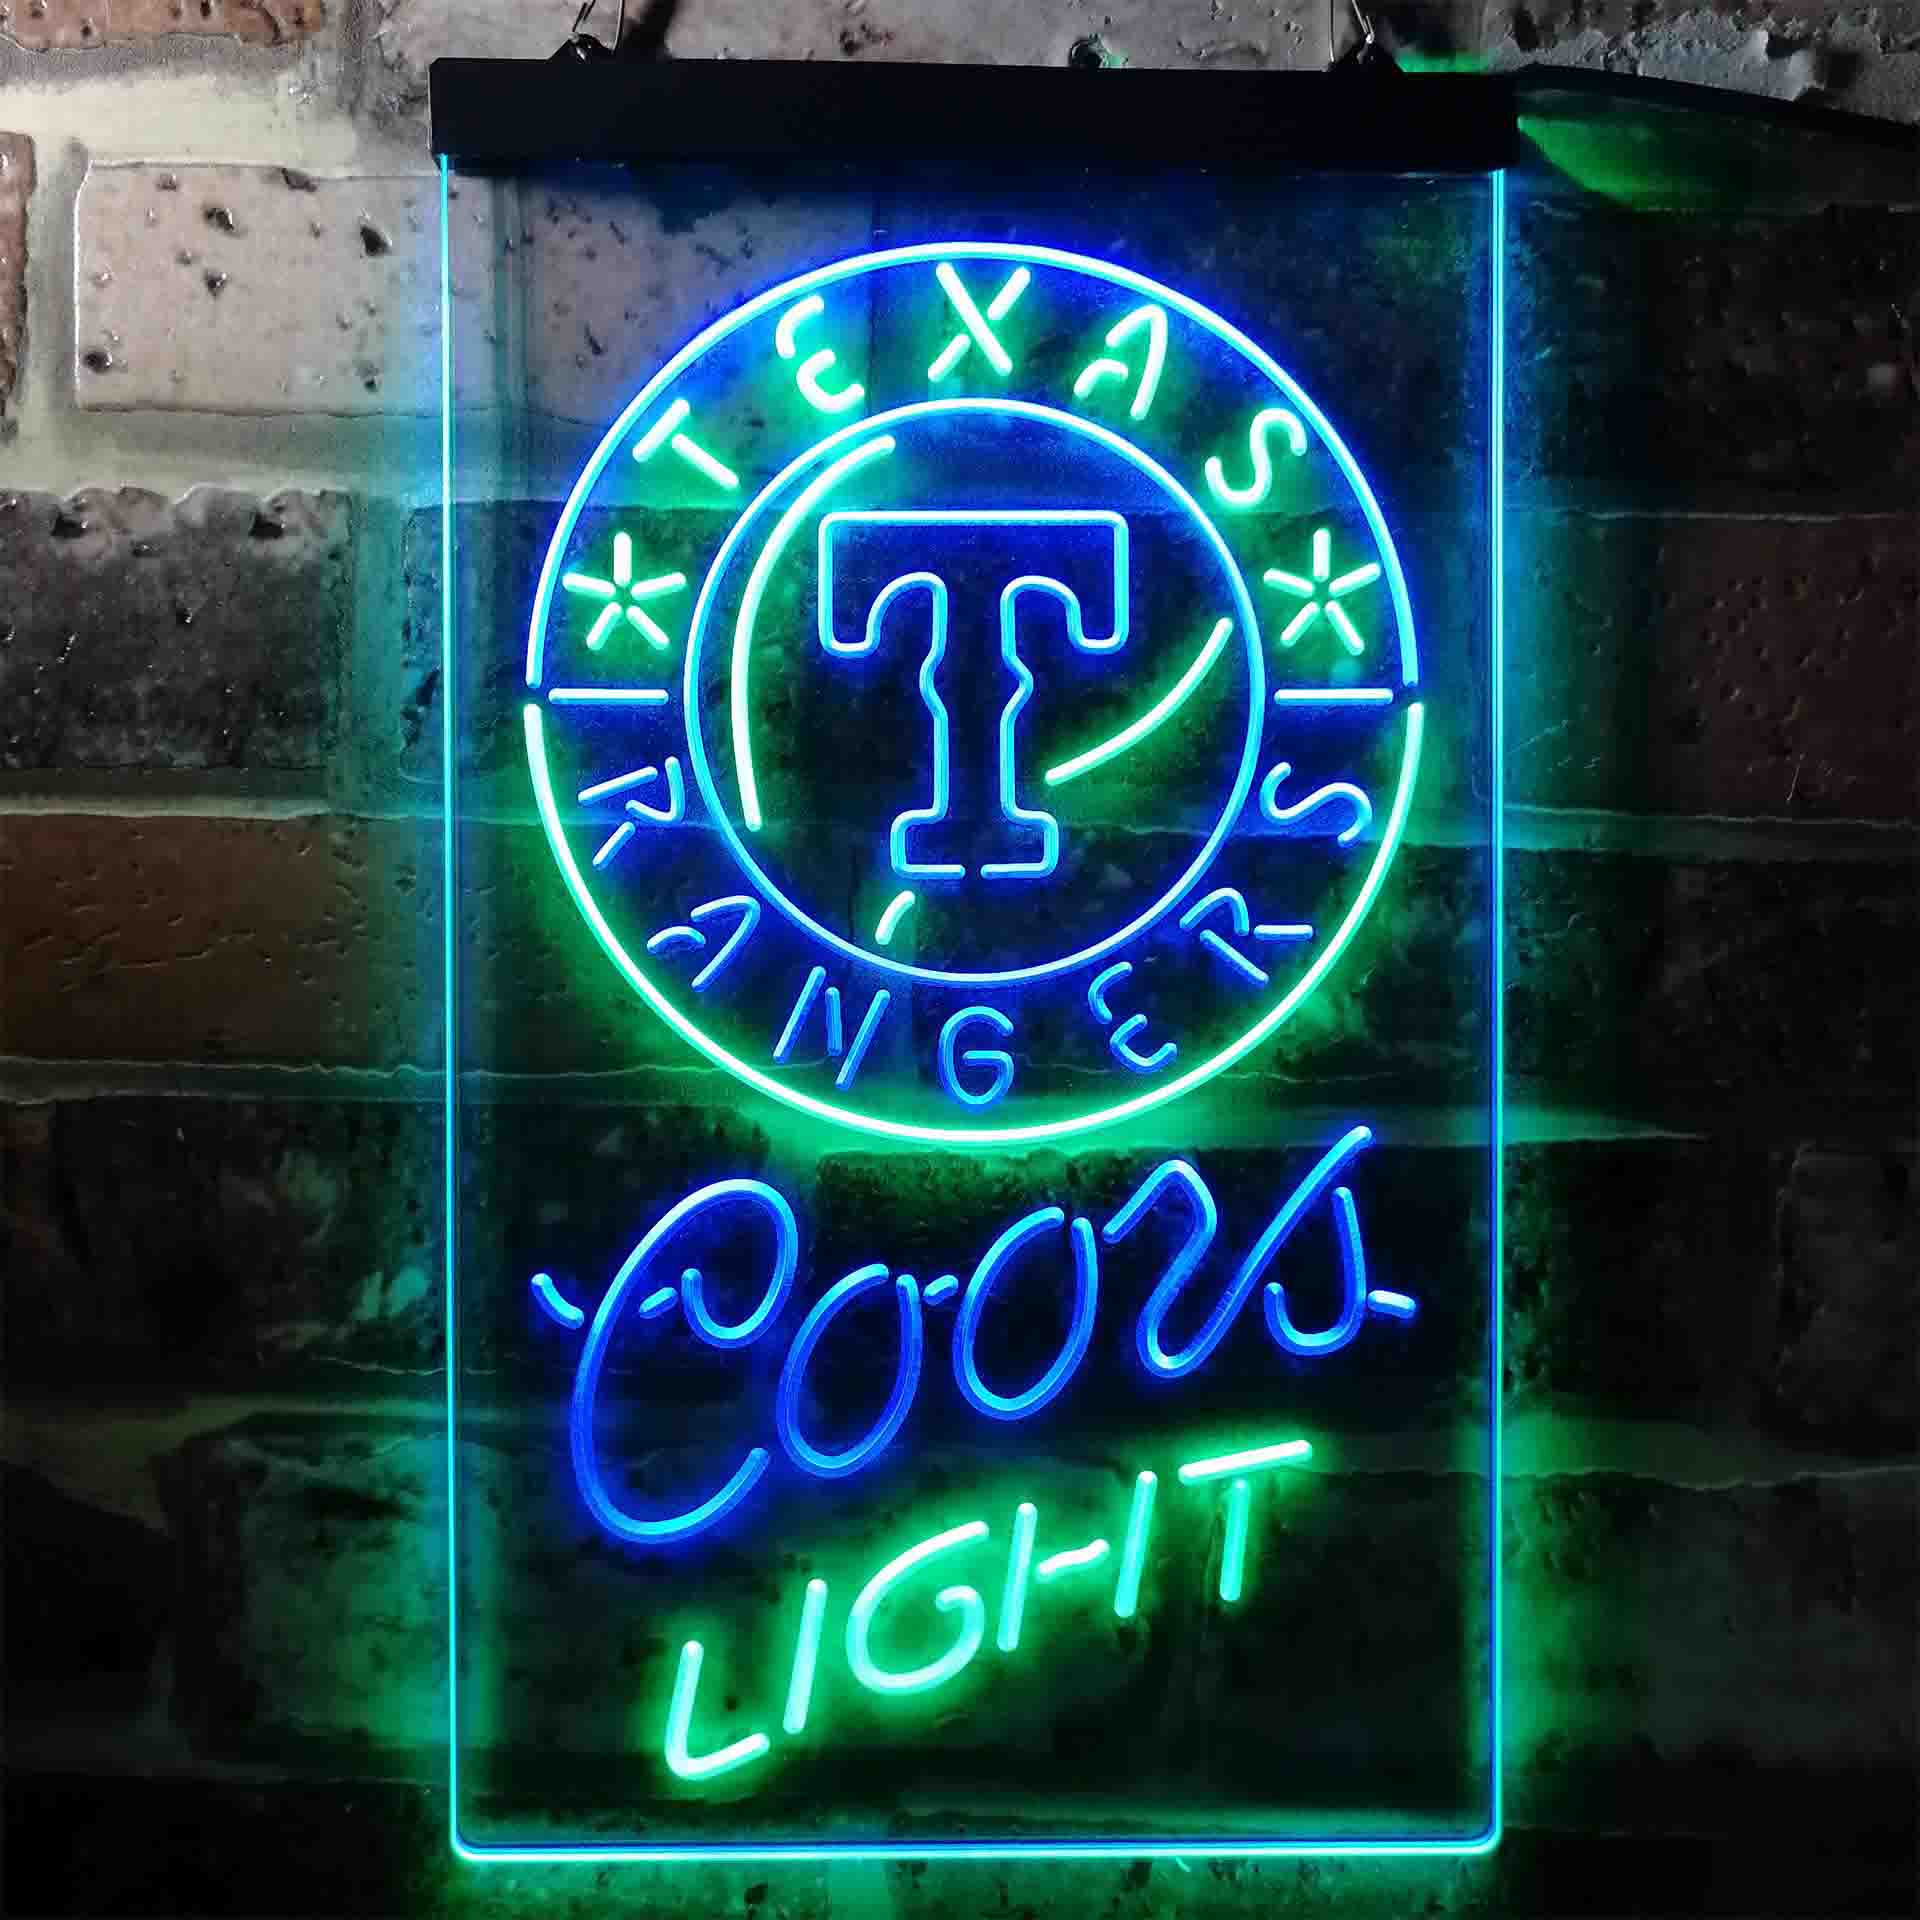 Texas Rangers Coors Light LED Neon Sign